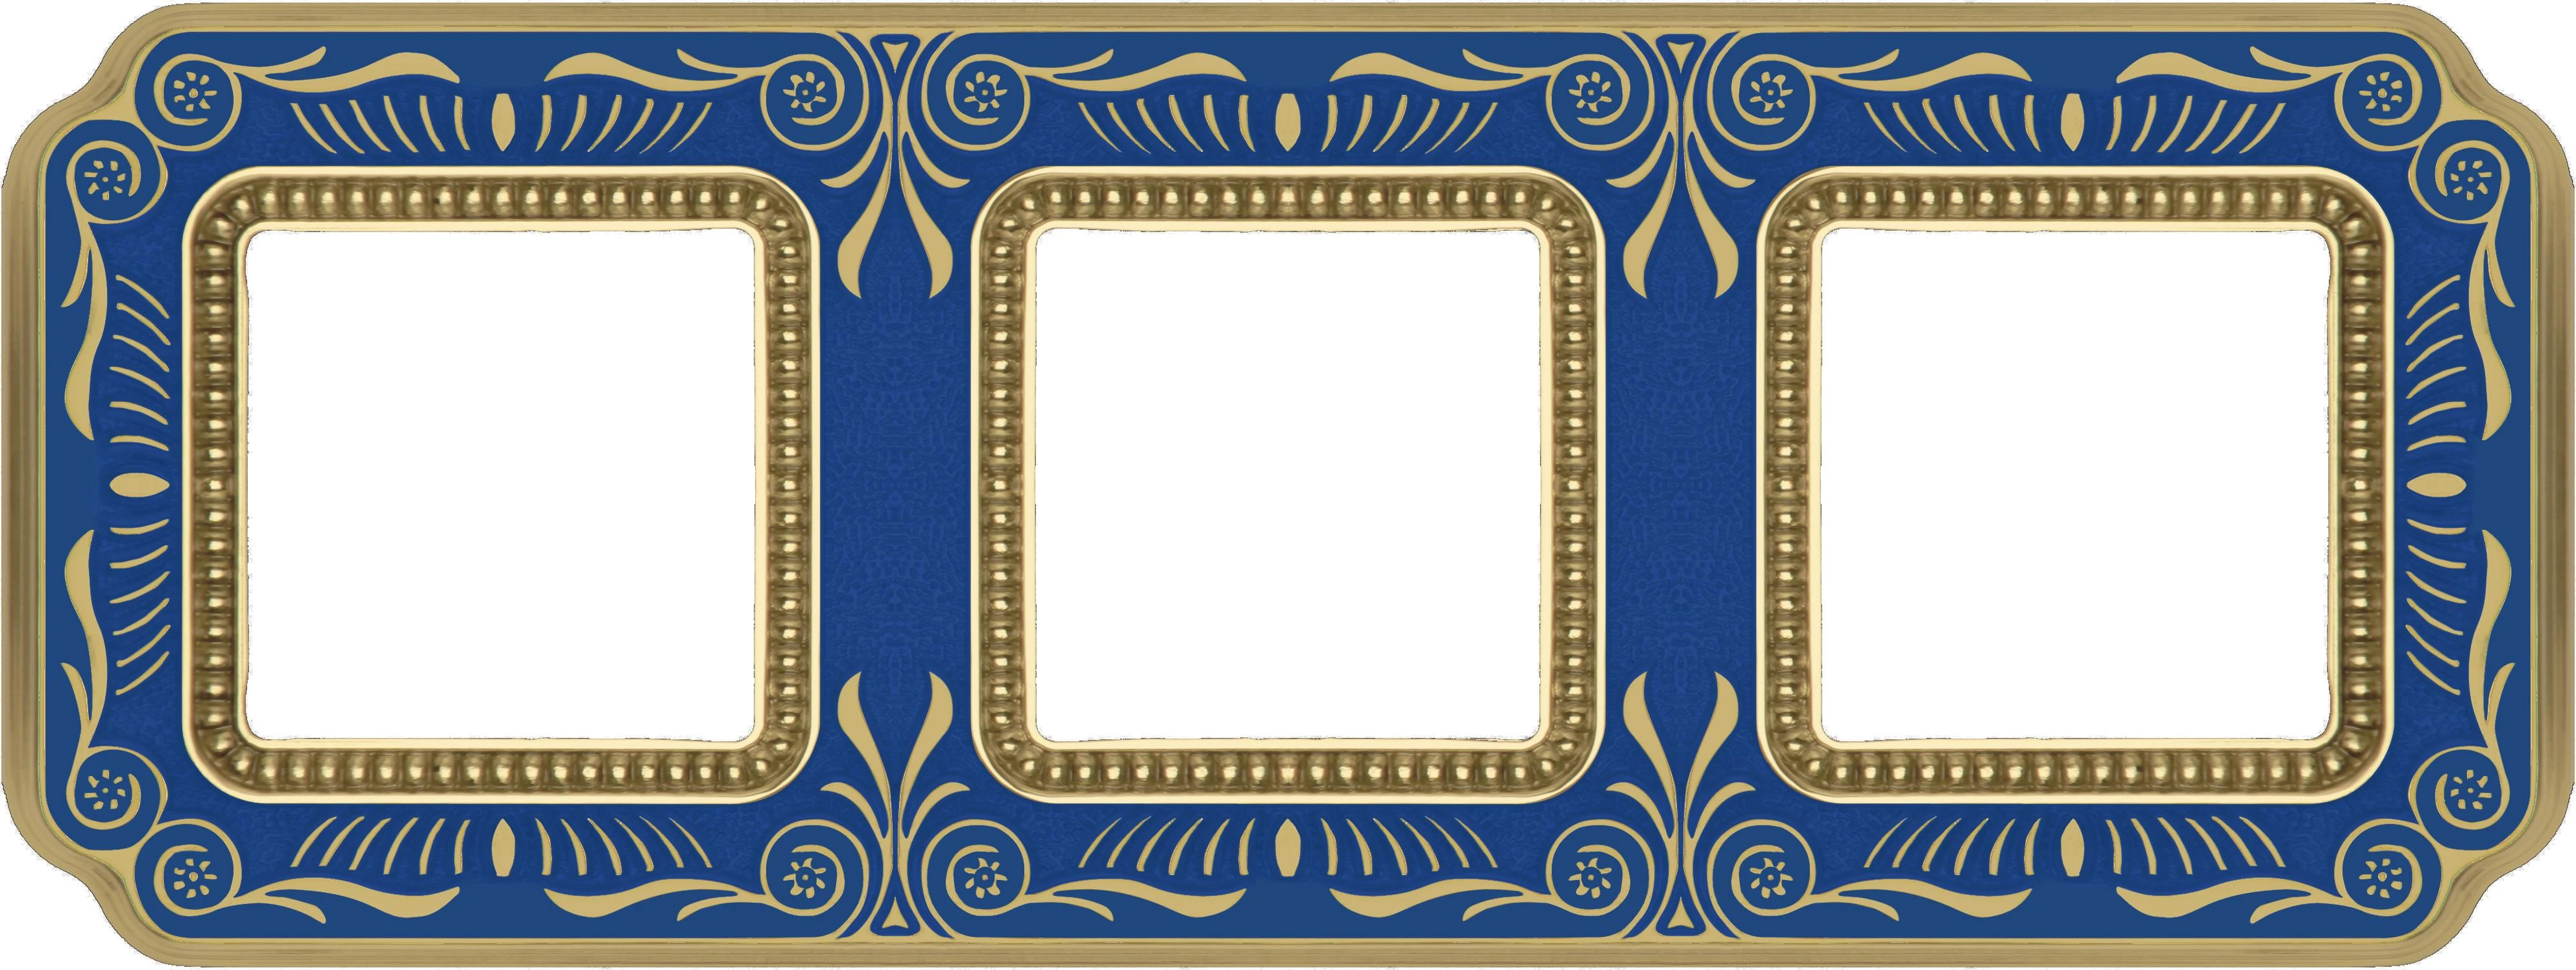  артикул FD01363AZEN название Рамка тройная, цвет Голубой сапфир, Firenze, Fede